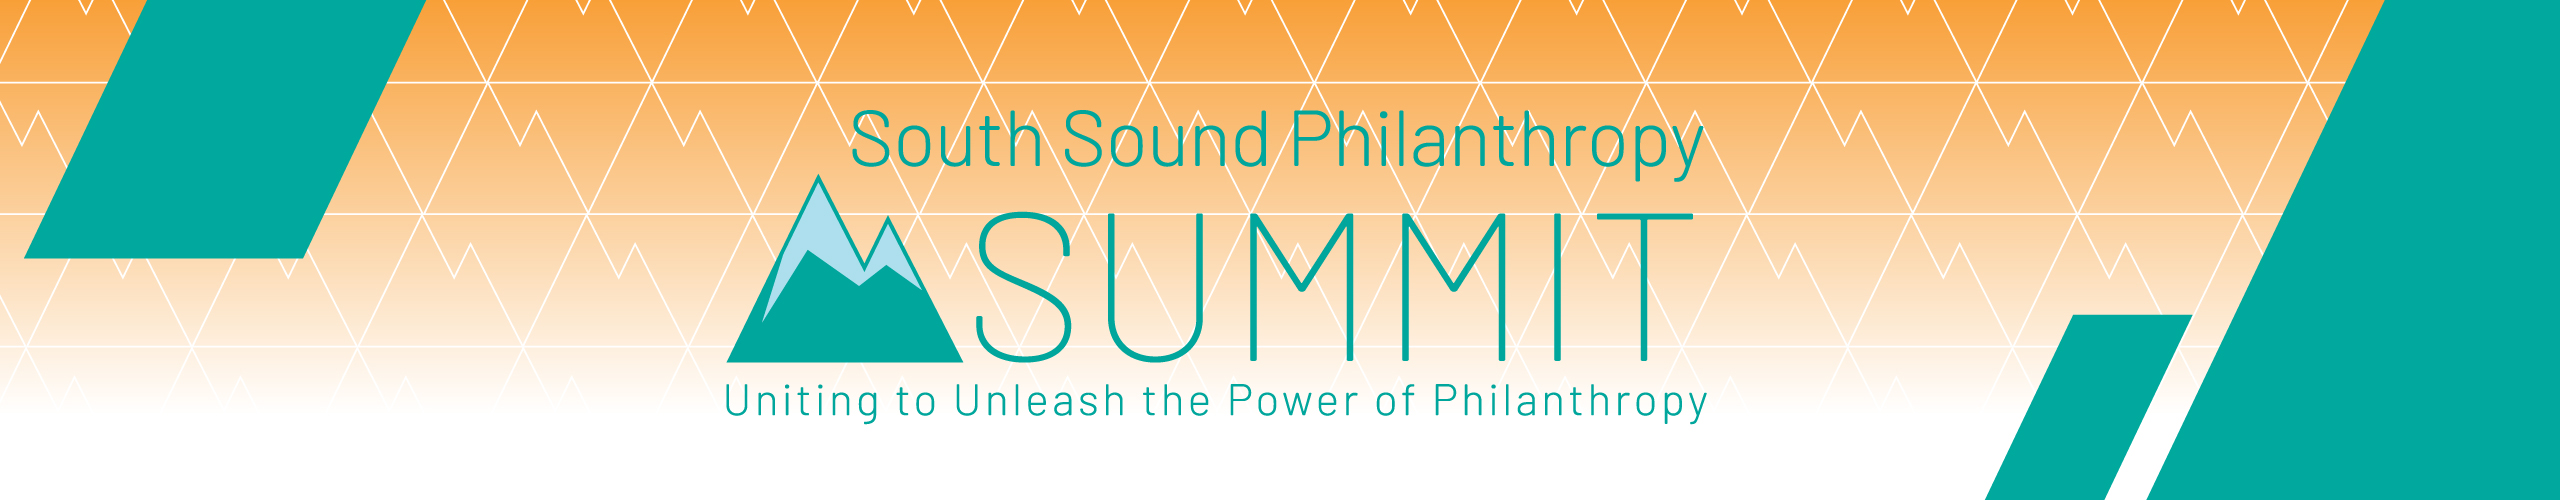 South Sound Philanthropy Summit logo